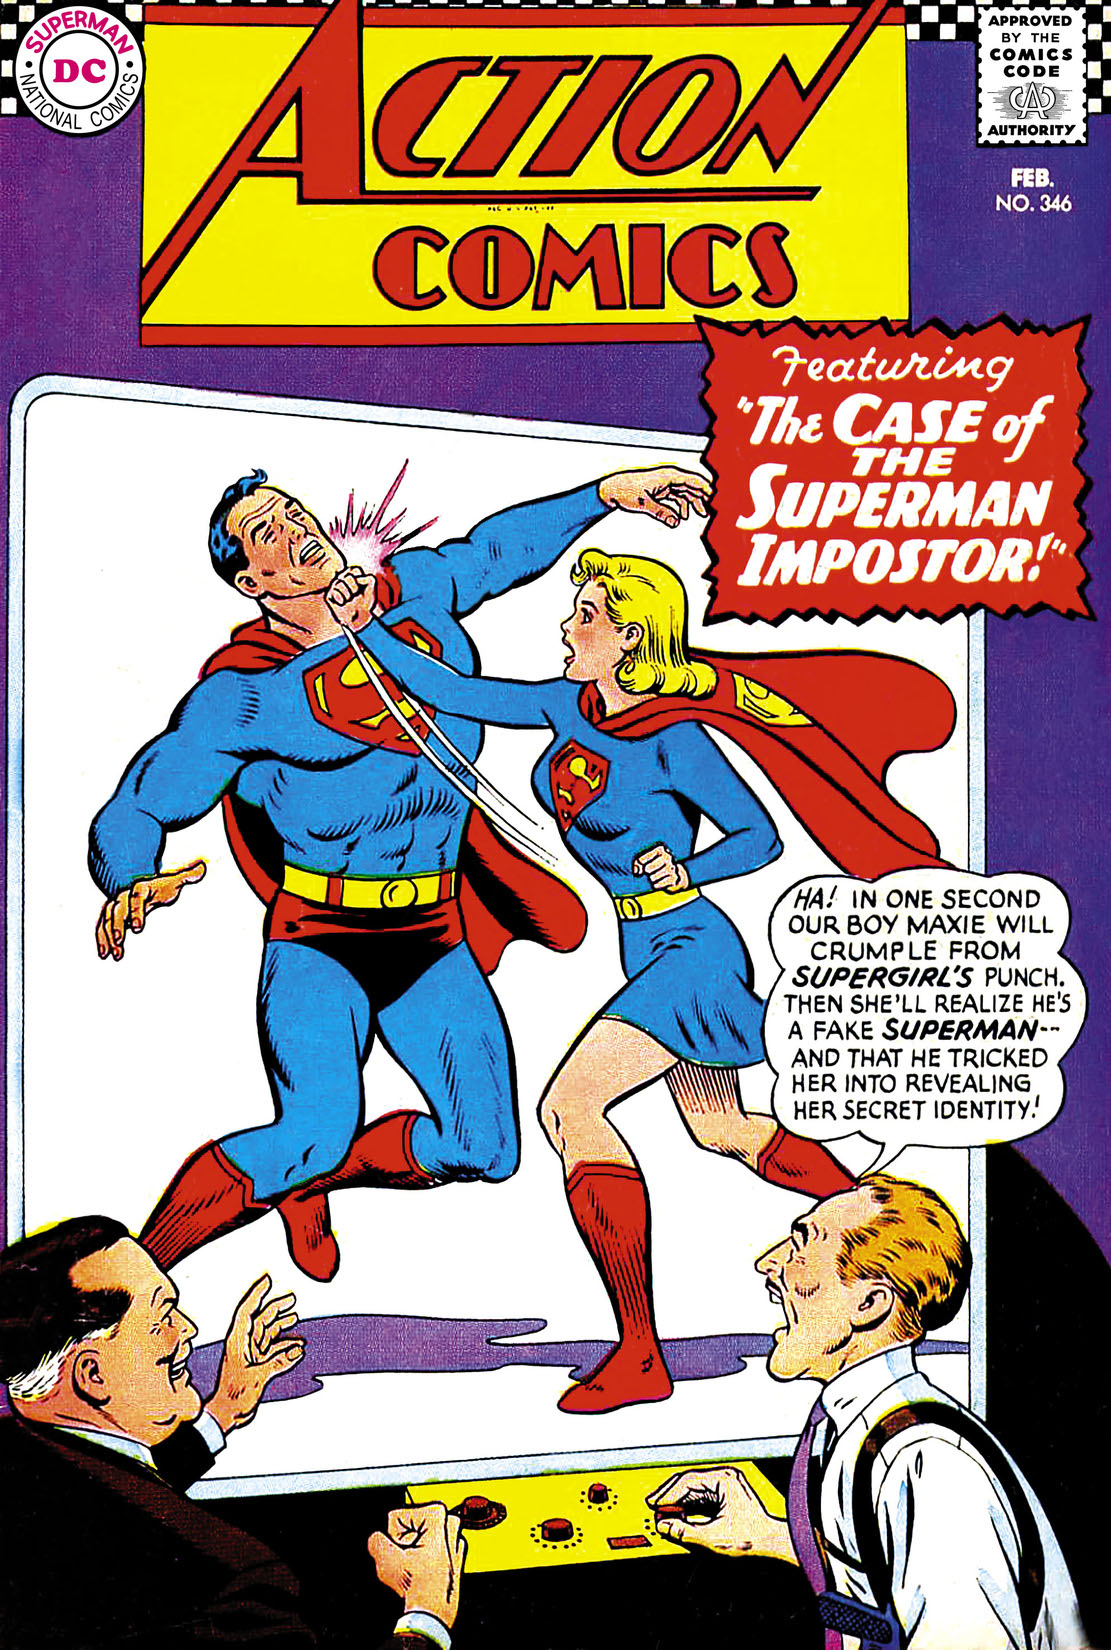 Action Comics (1938-) #346 preview images